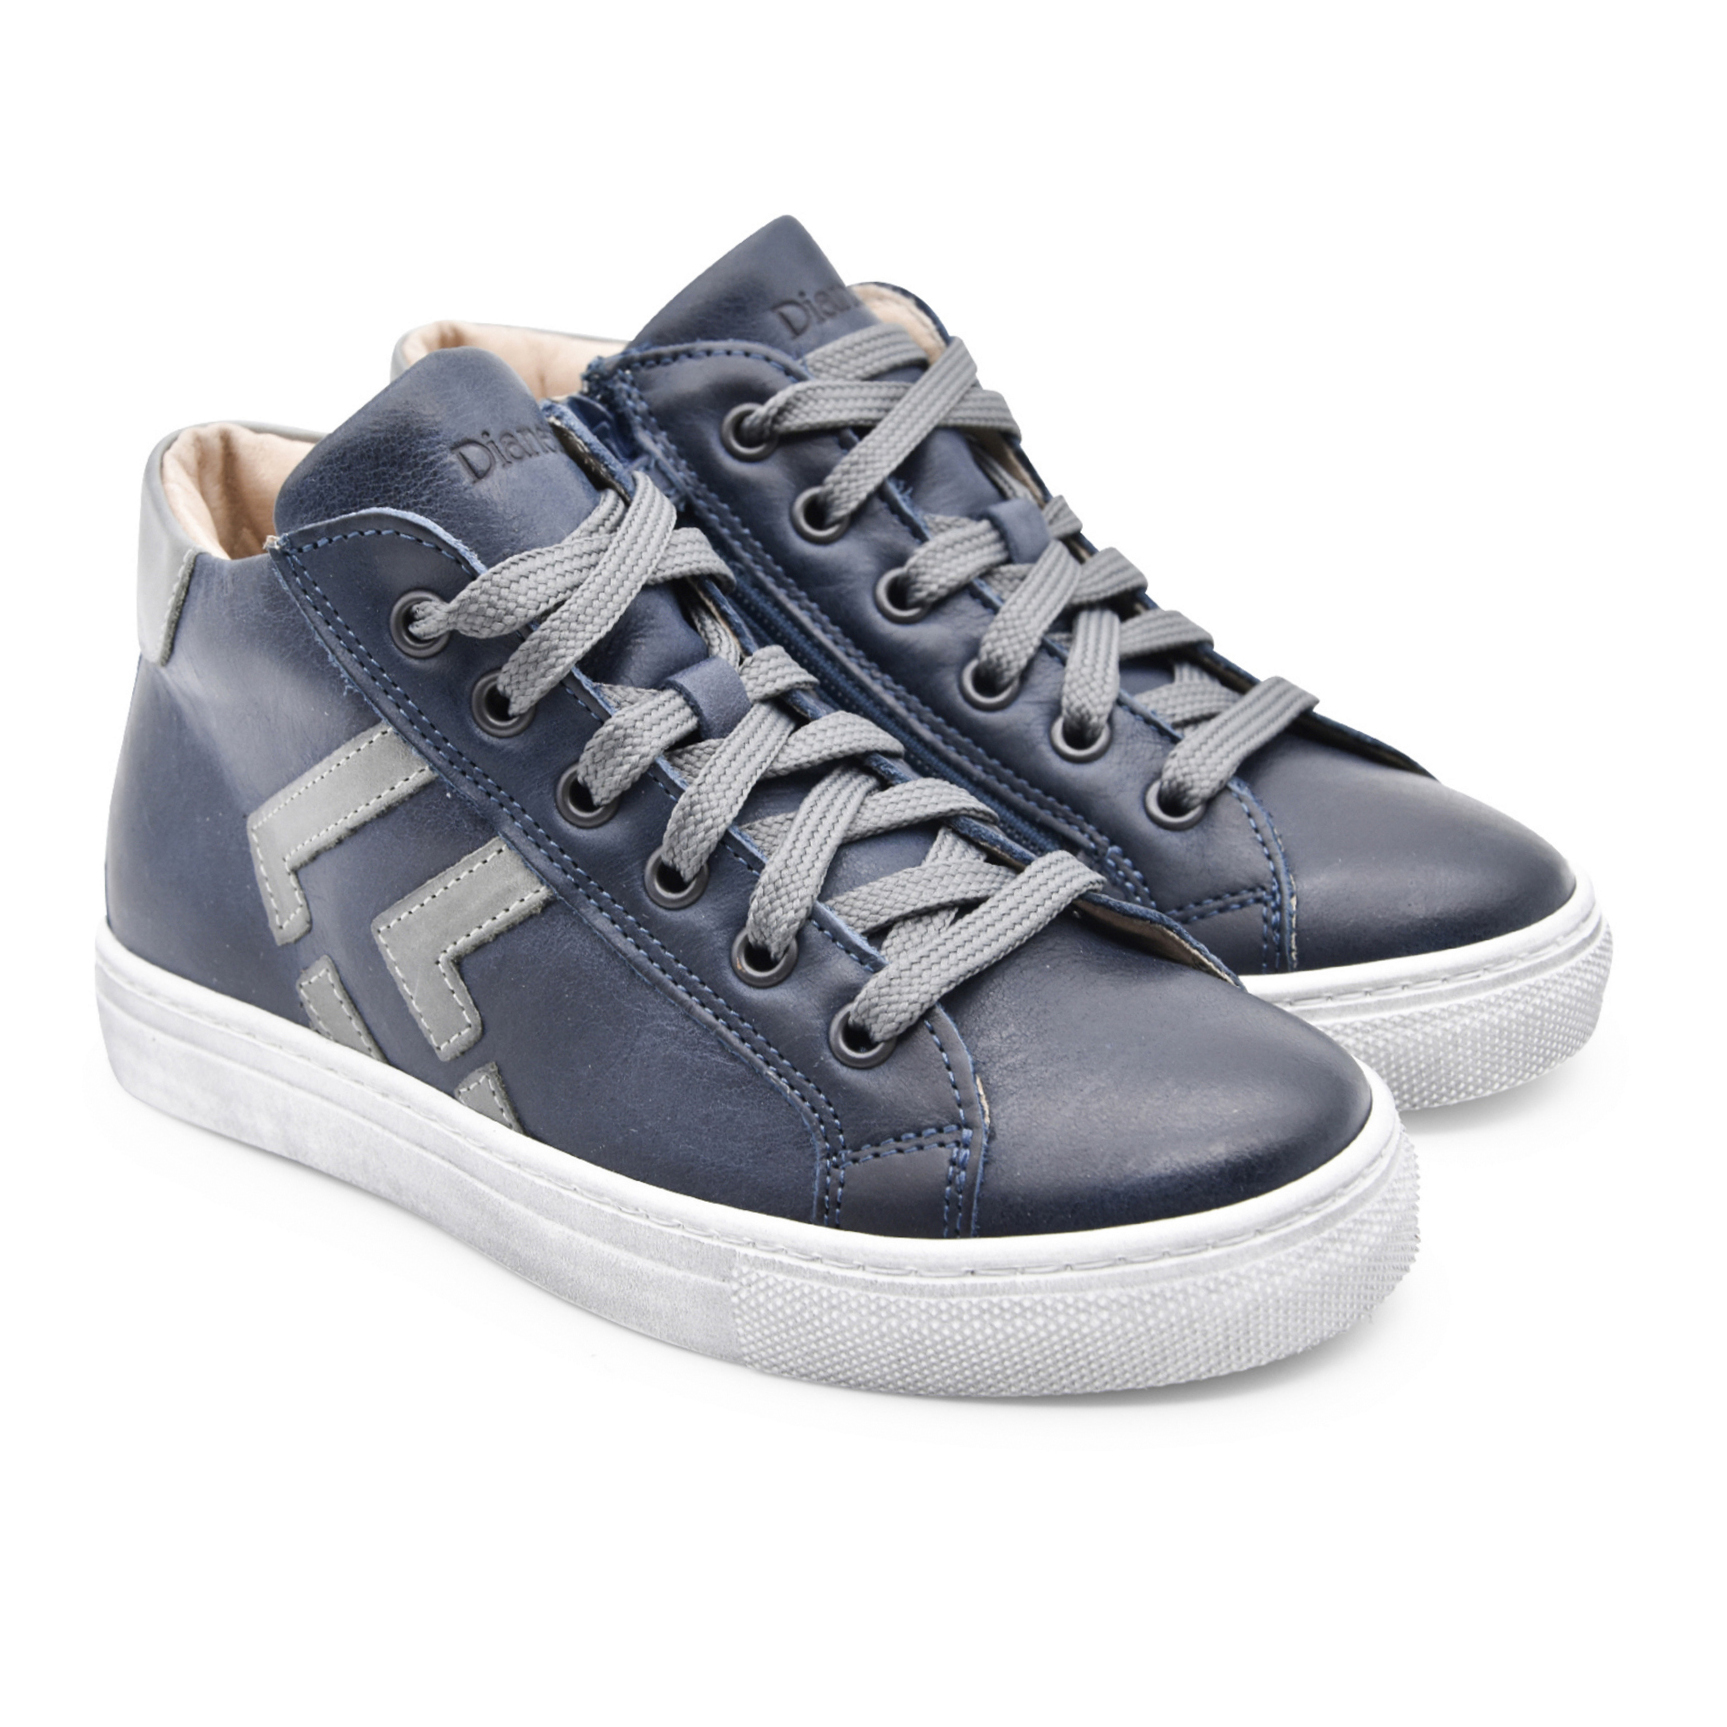 Dianetti Casual, sneakers, made in Italy, pelle, lacci, zip, blu, grigio, fronte